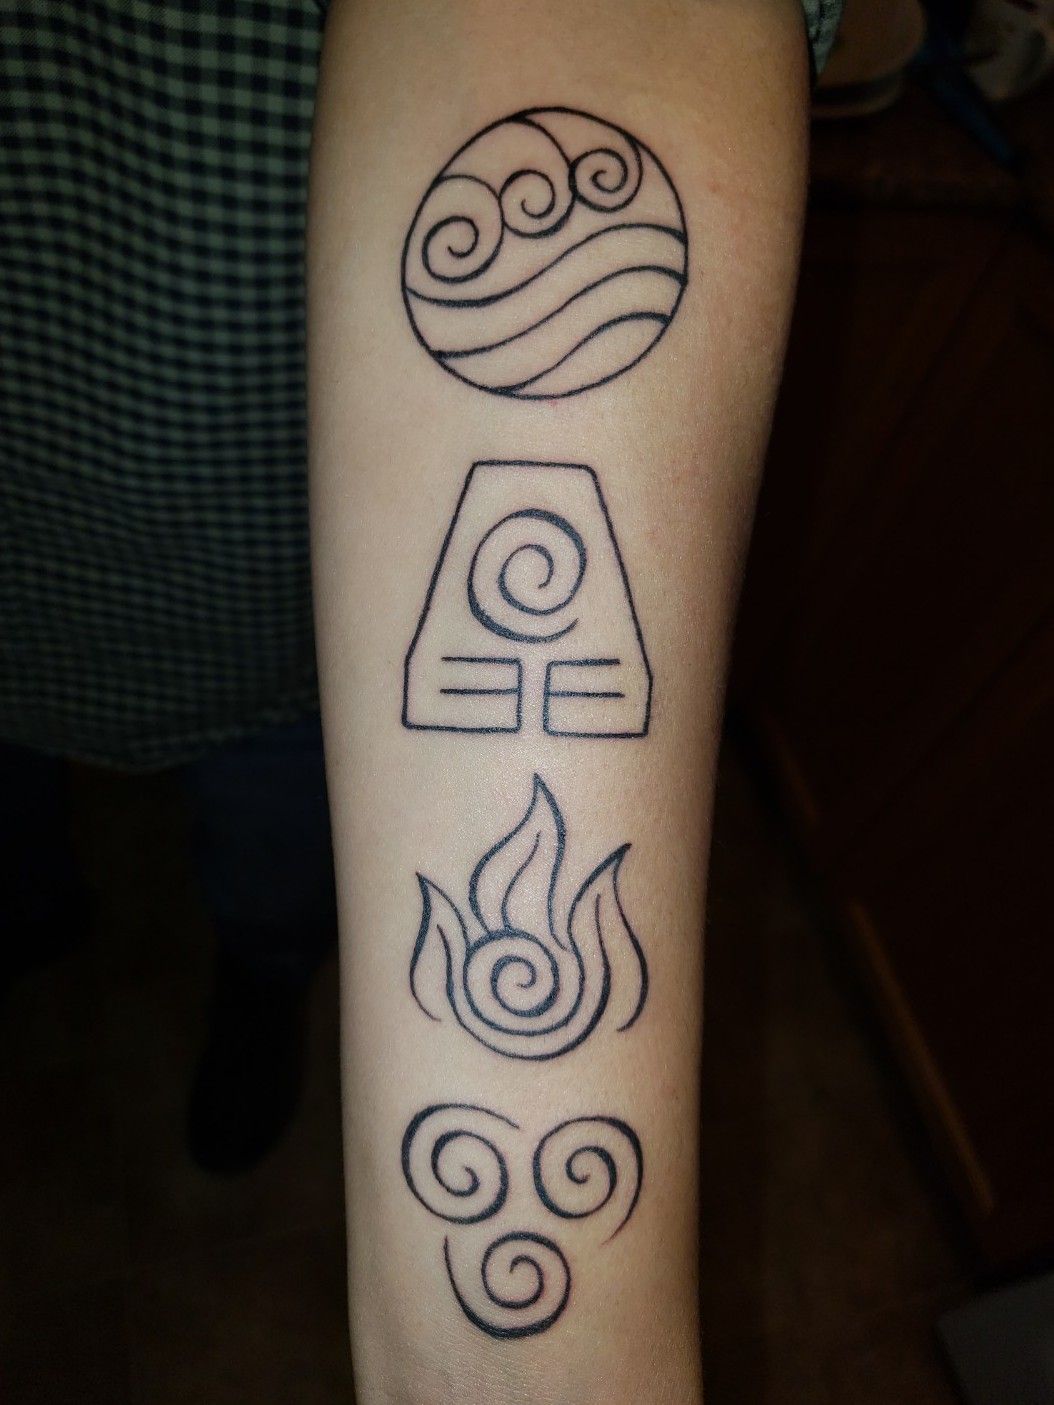 Tattoo uploaded by Jordan Stanley  Avatar  The Four Elements  Tattoodo